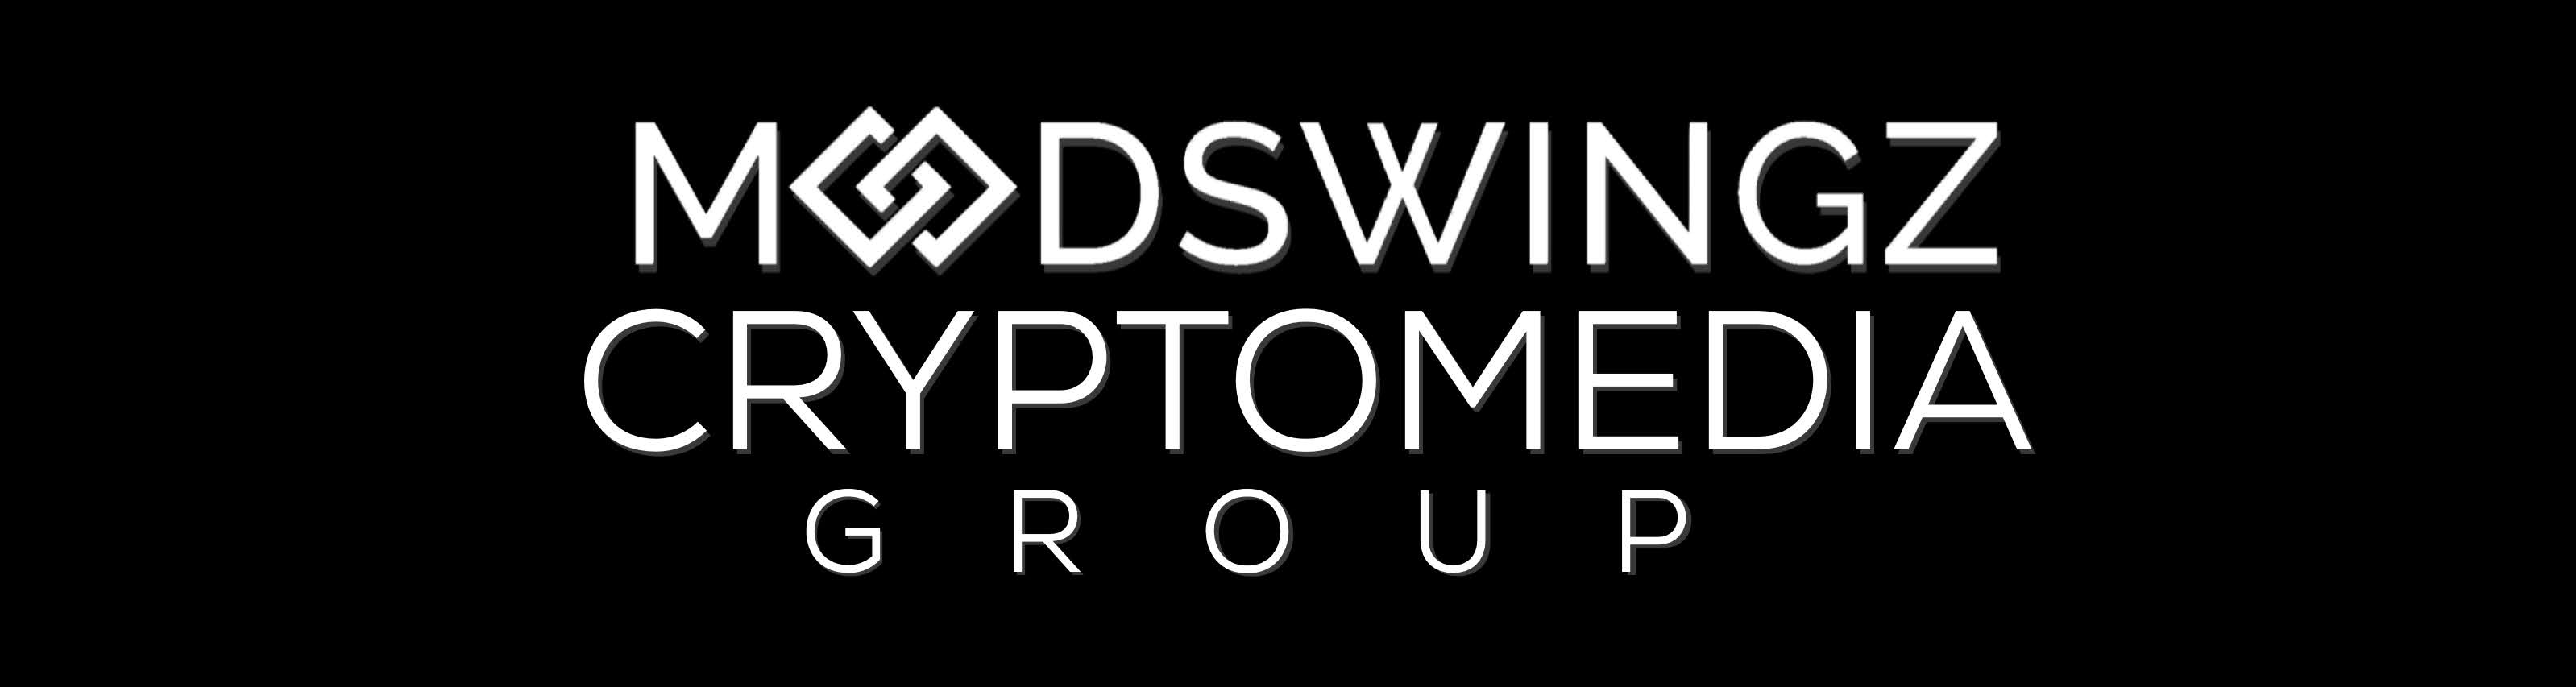 MoodswingzCryptomedia banner